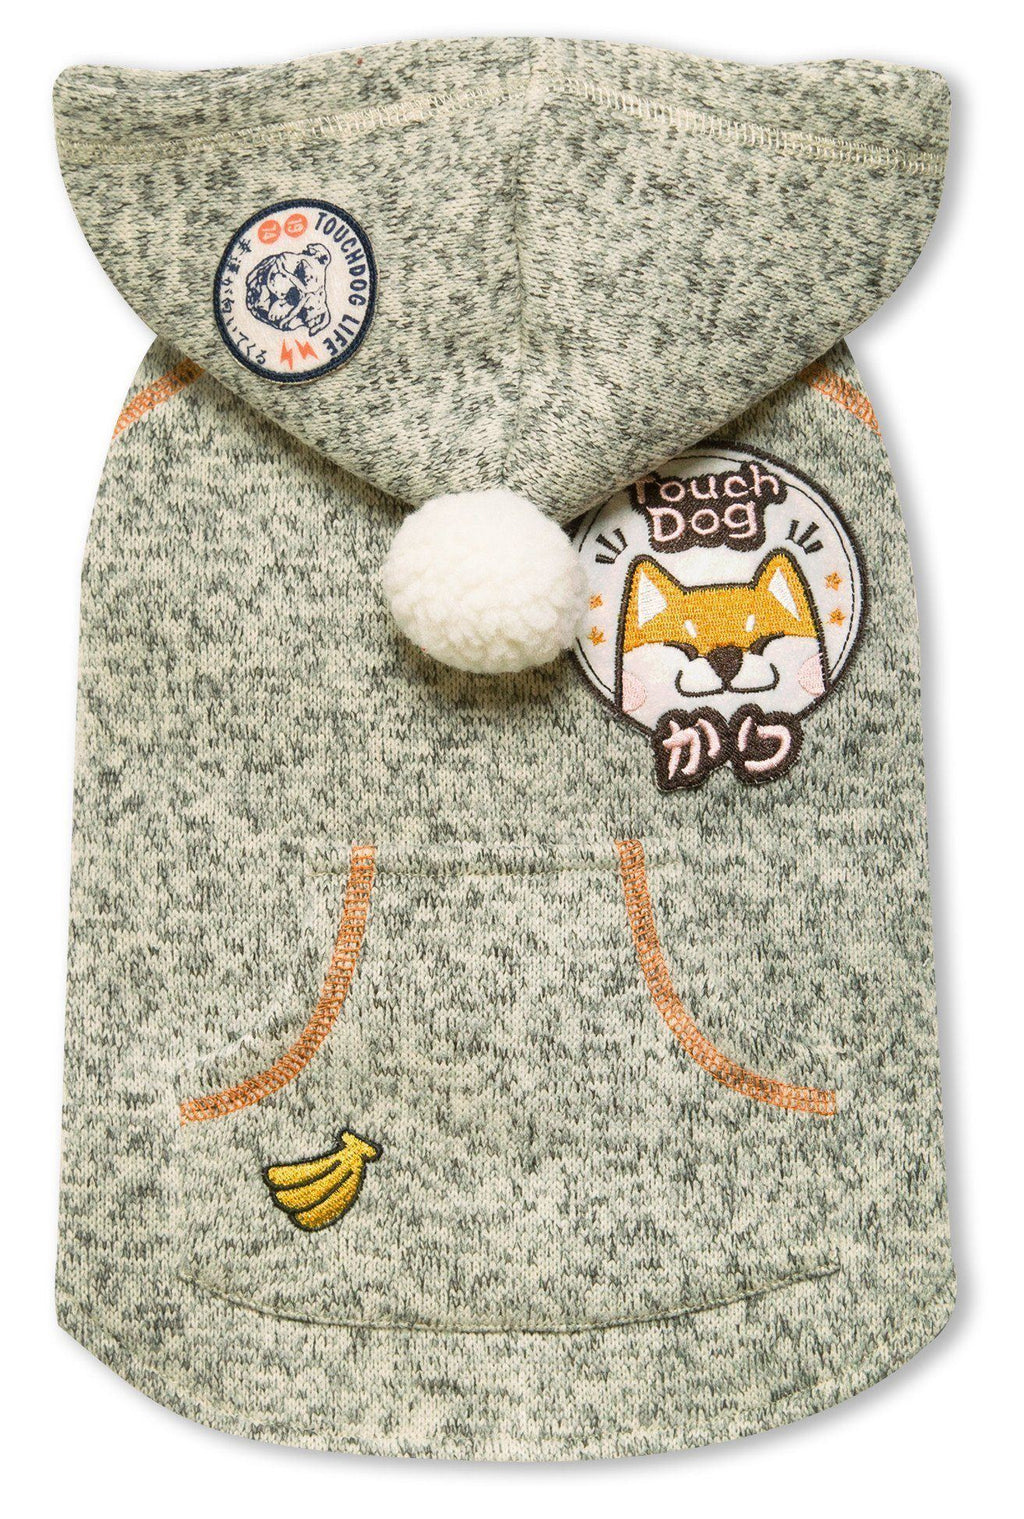 Touchdog ® Hippie Embellished Sleeveless Pompom Hooded Fashion Dog Sweater X-Small Oliv...